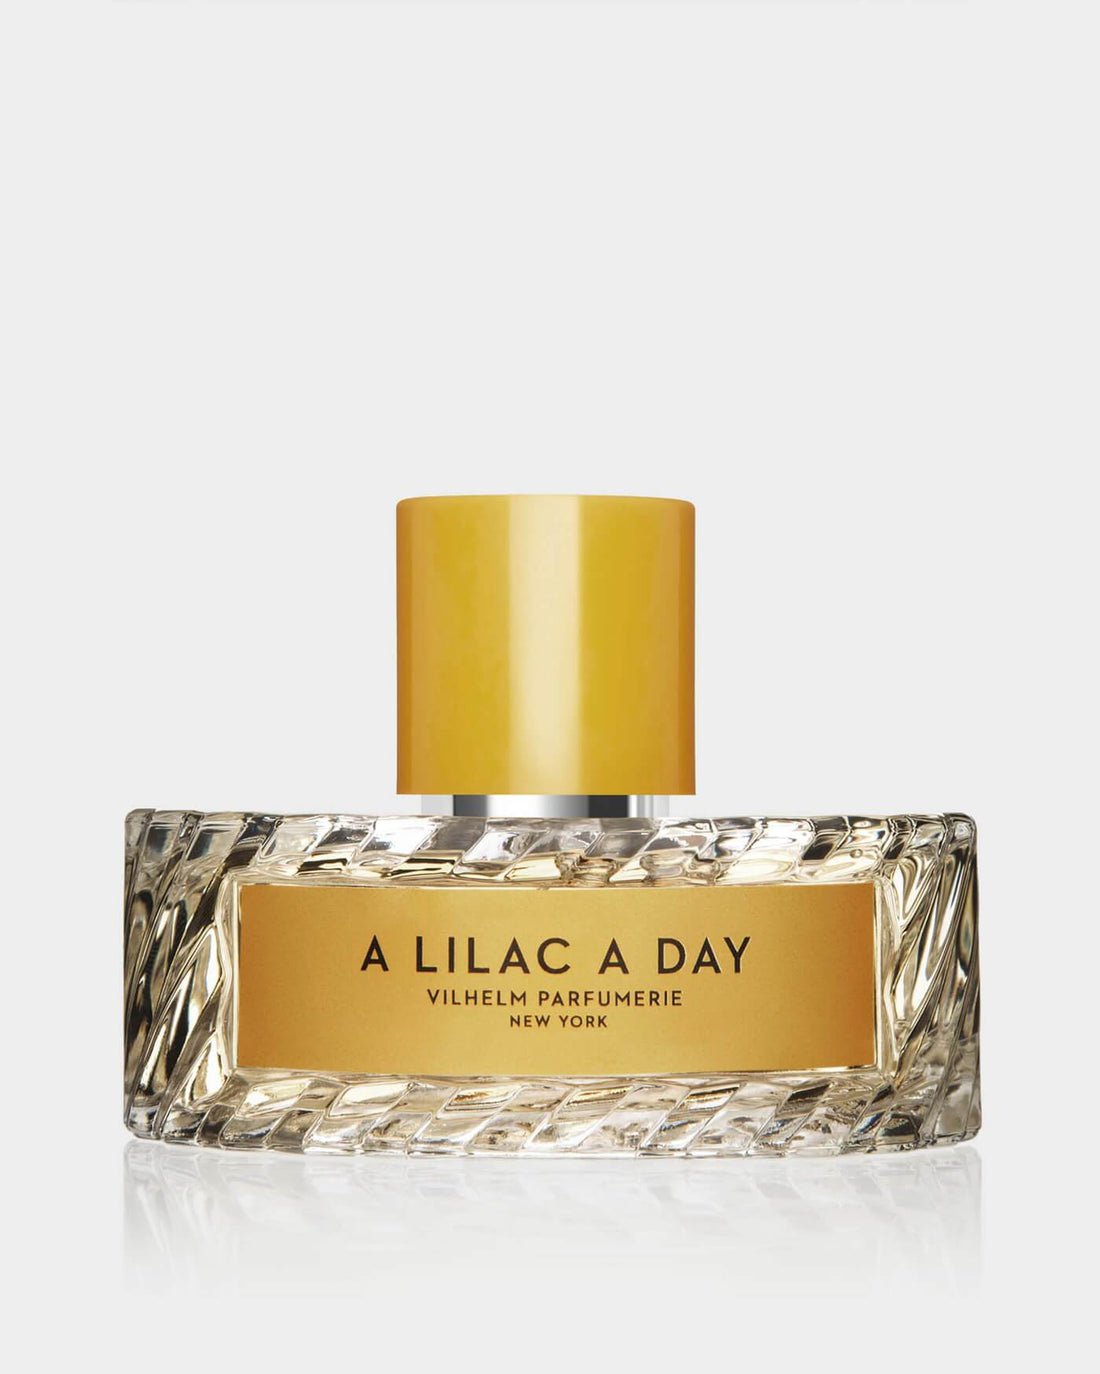 A LILAC A DAY - Vilhelm Parfumerie